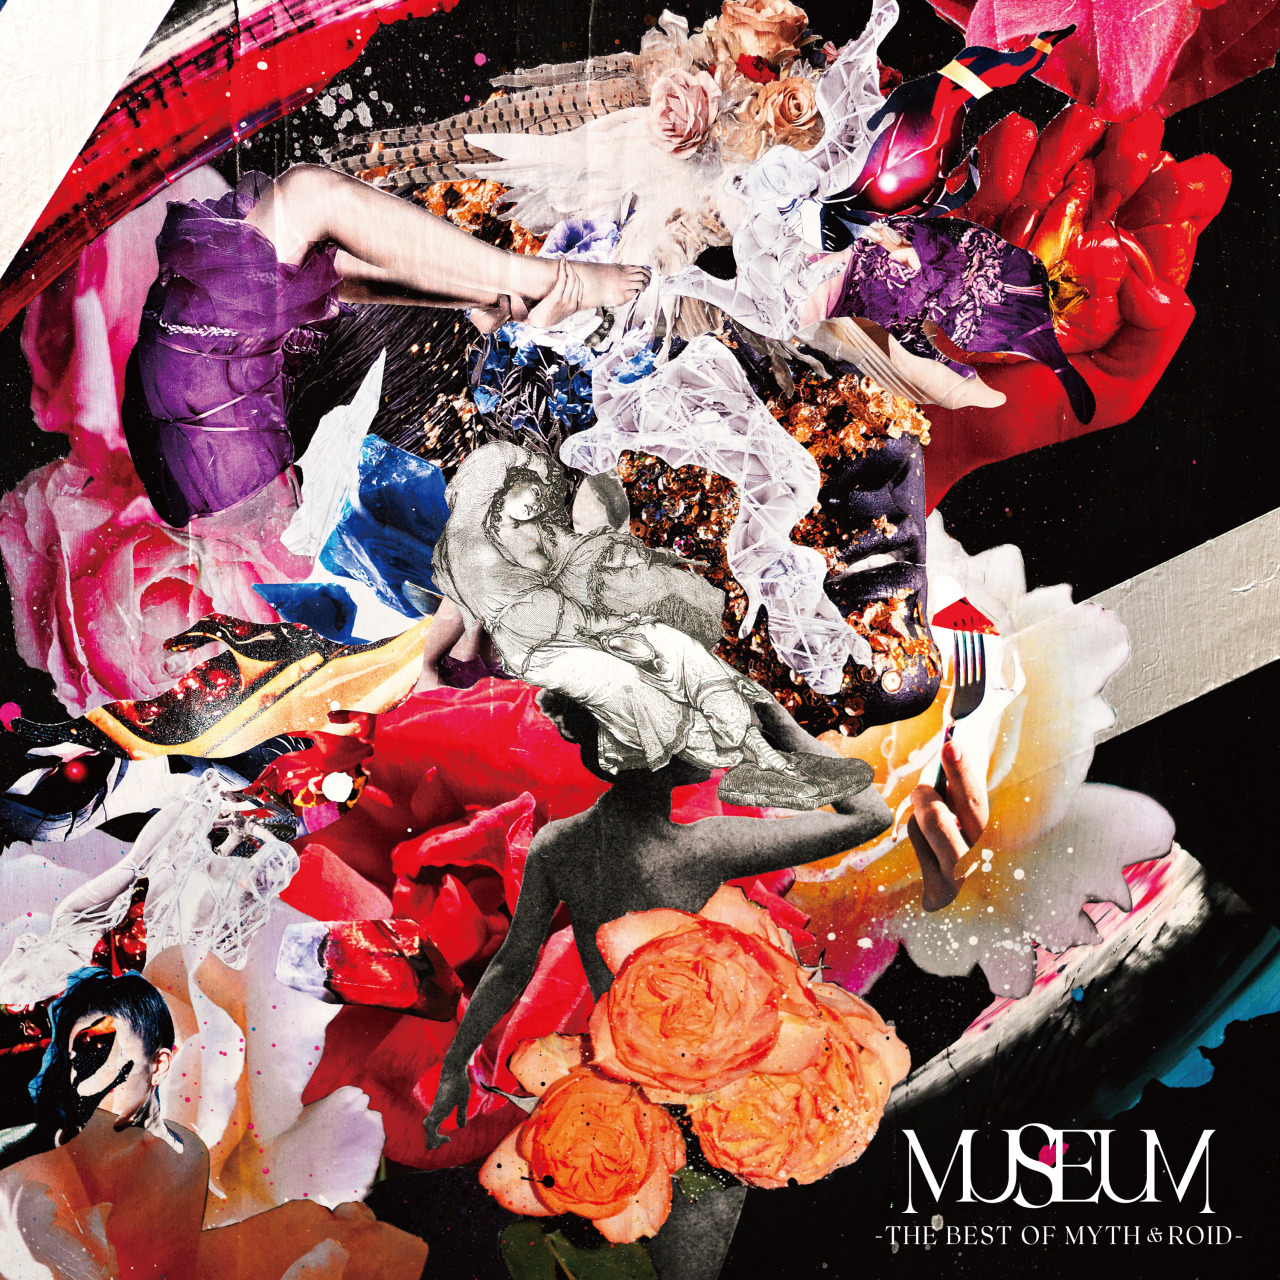 MYTH & ROID 「MUSEUM-THE BEST OF MYTH & ROID-」CD Jacket